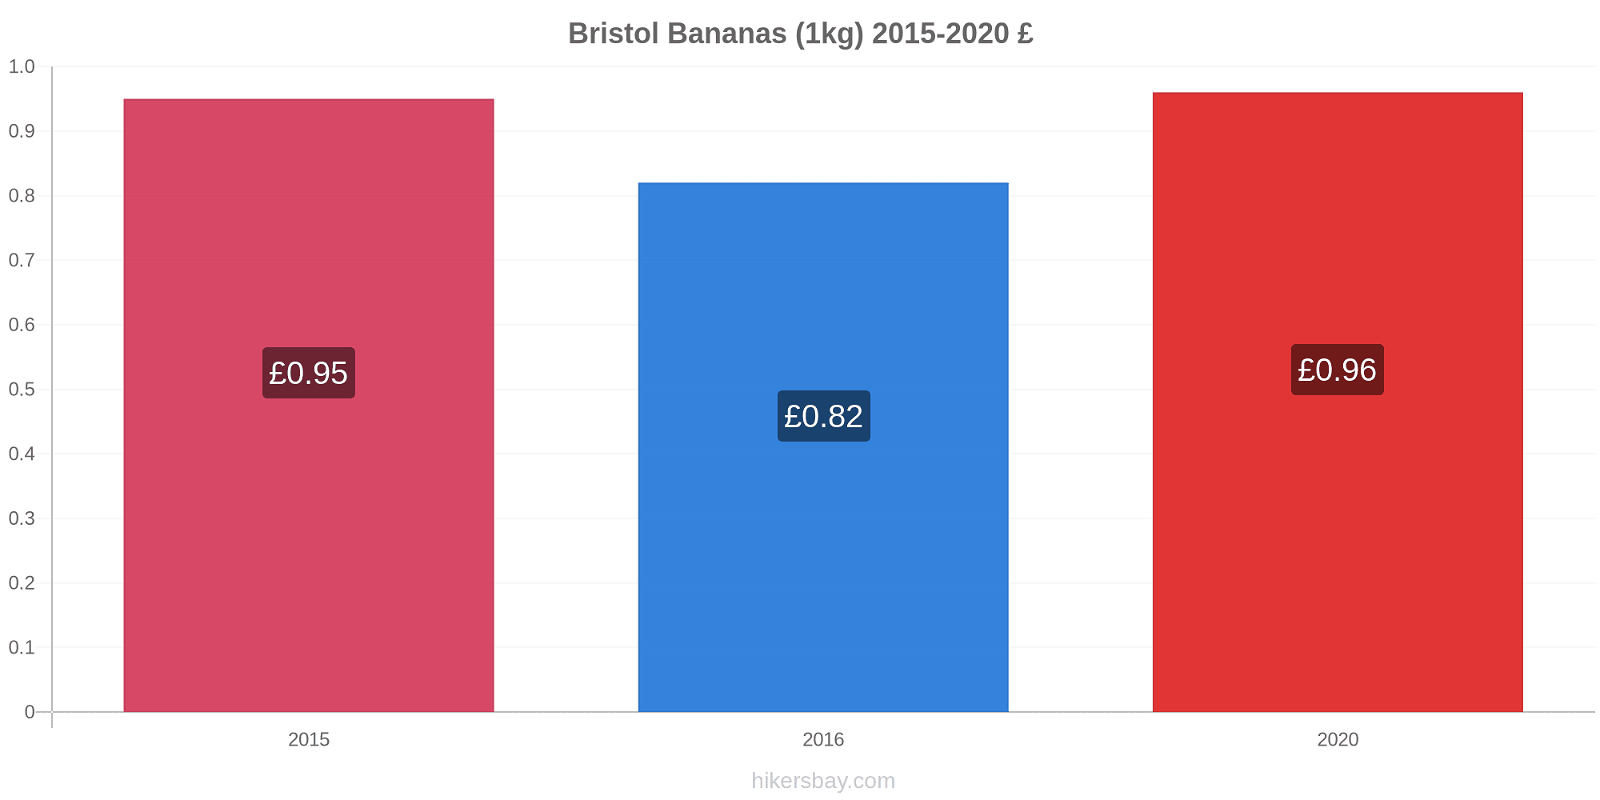 Bristol price changes Bananas (1kg) hikersbay.com